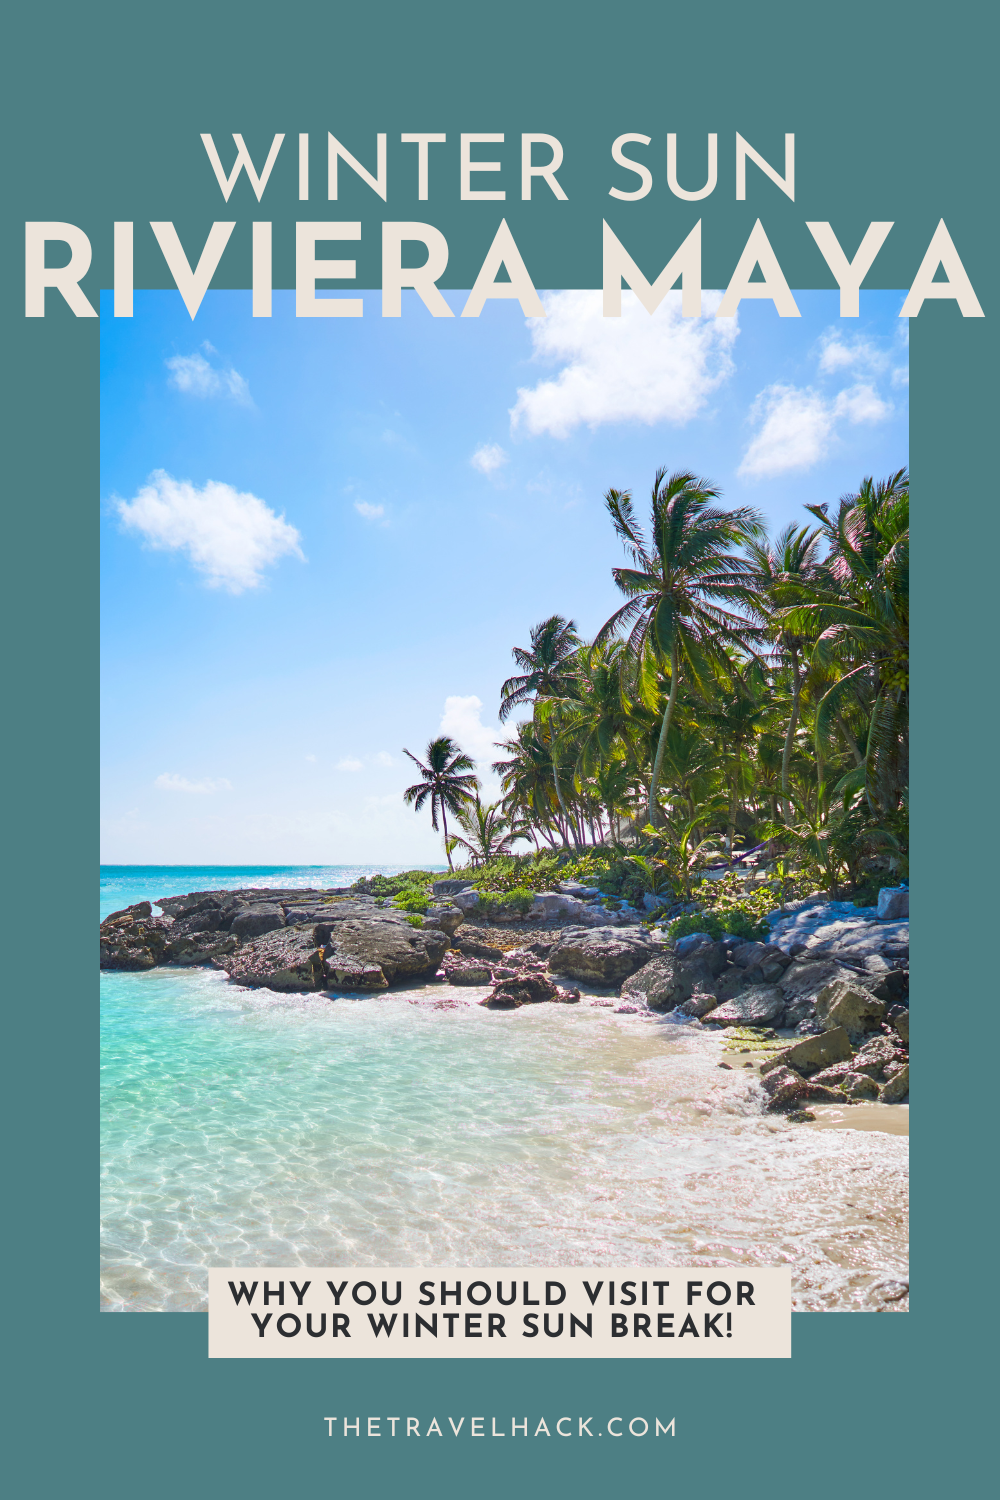 Riviera Maya vs Cancun for your next winter sun holiday